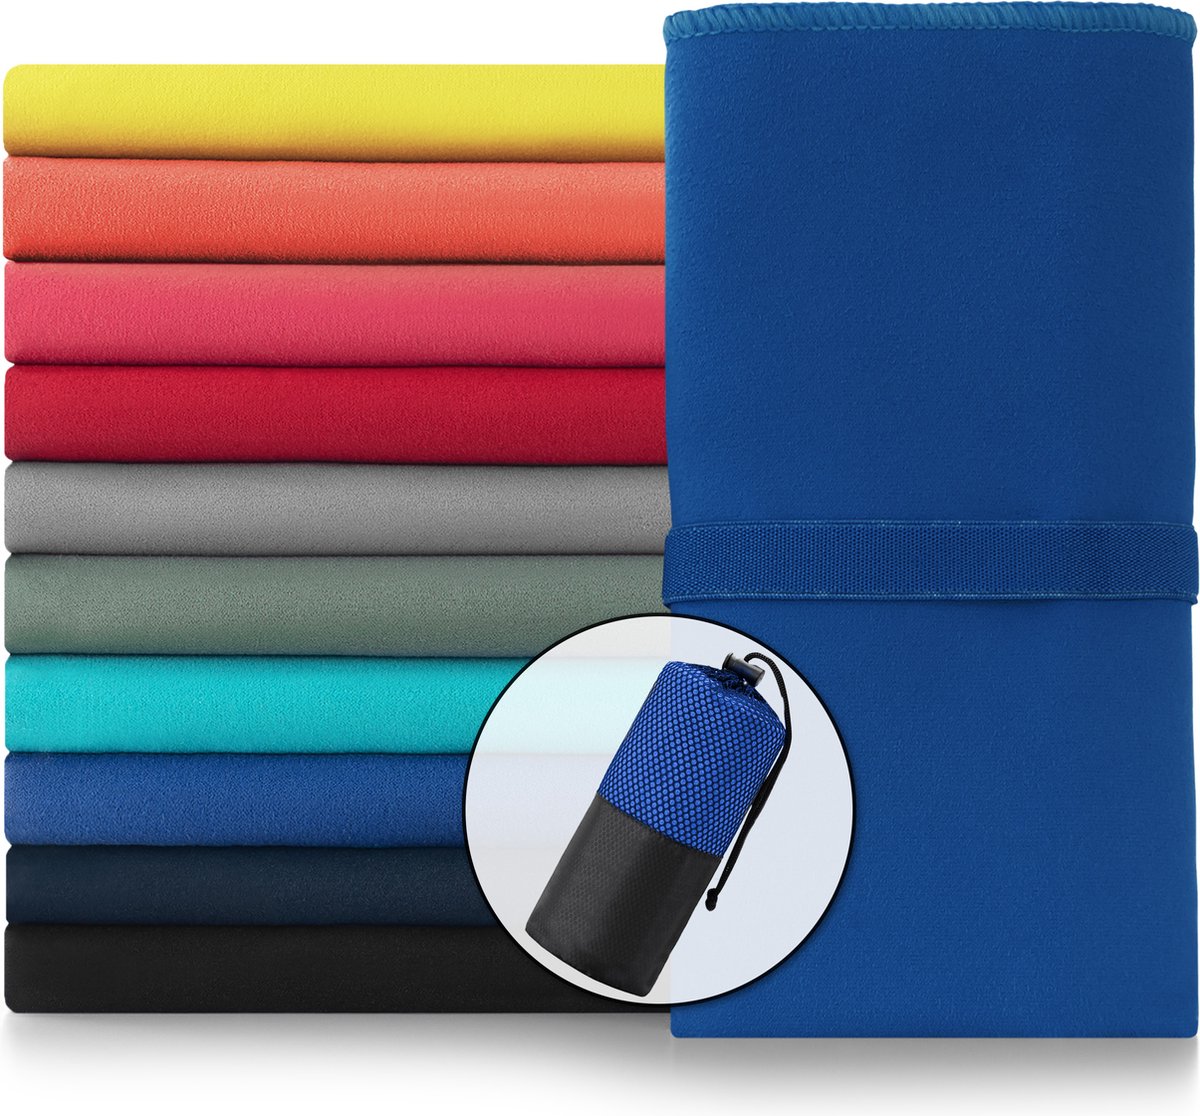 Blumtal Sporthanddoek microfiber: 80 x 40cm, koningsblauw, set van 2